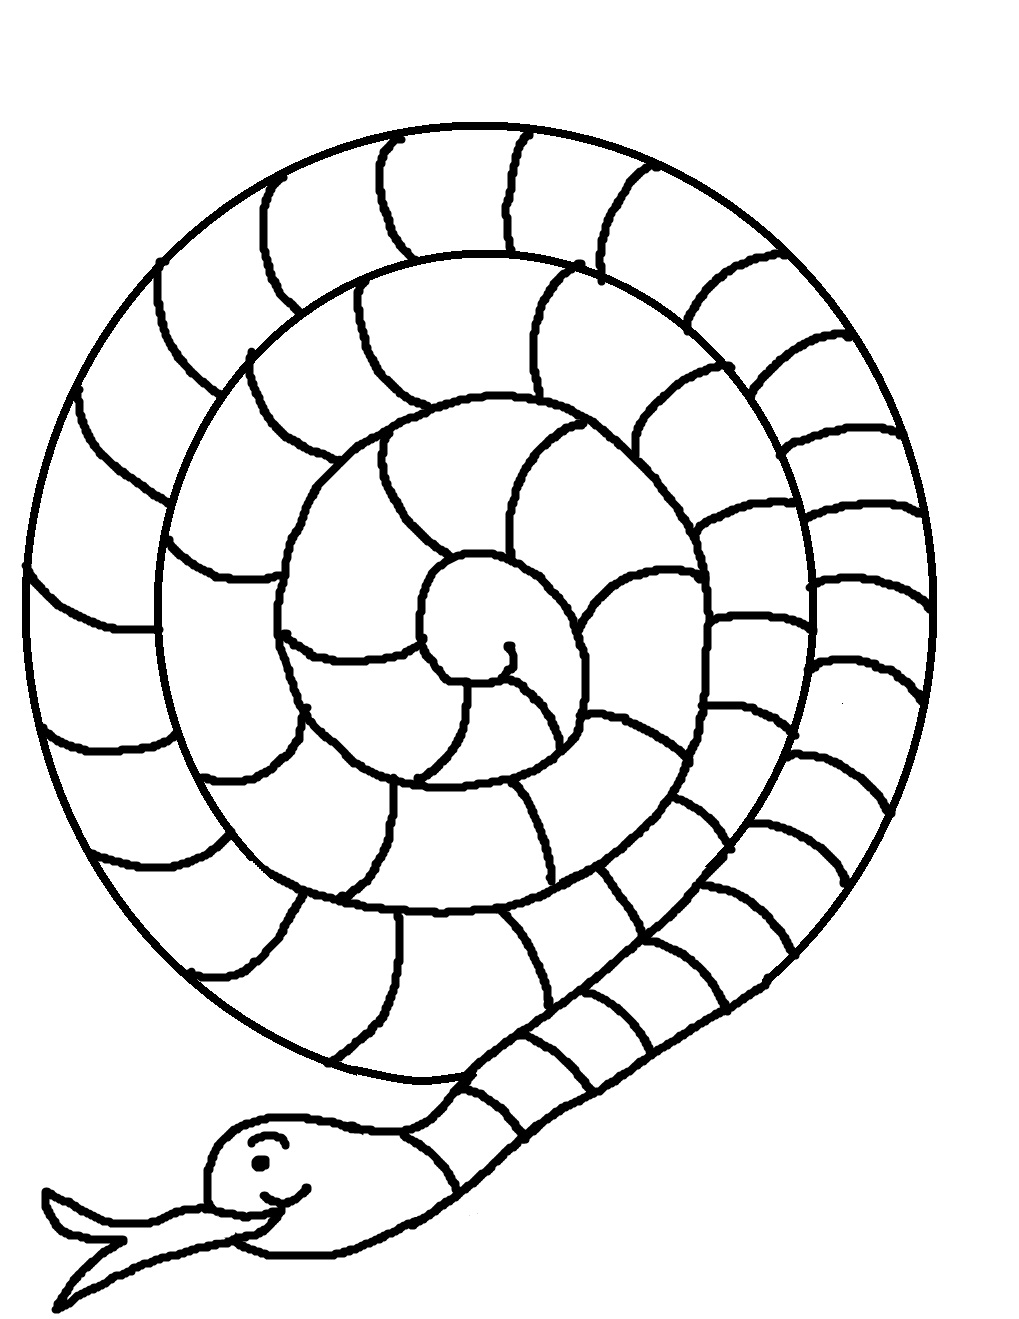 Serpent Template   Colored    Black   White  